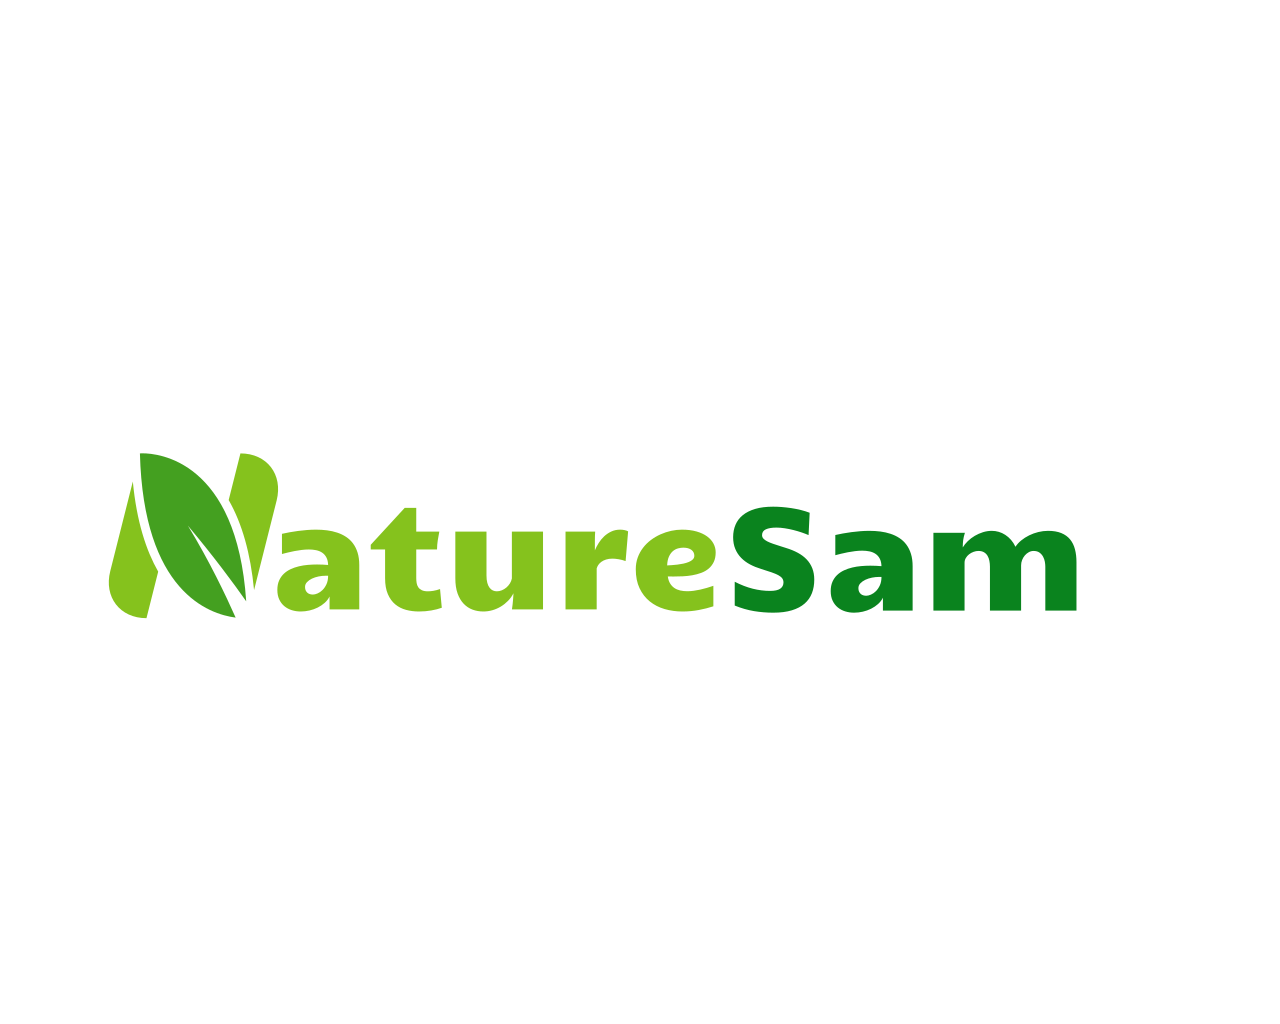 Nature Sam